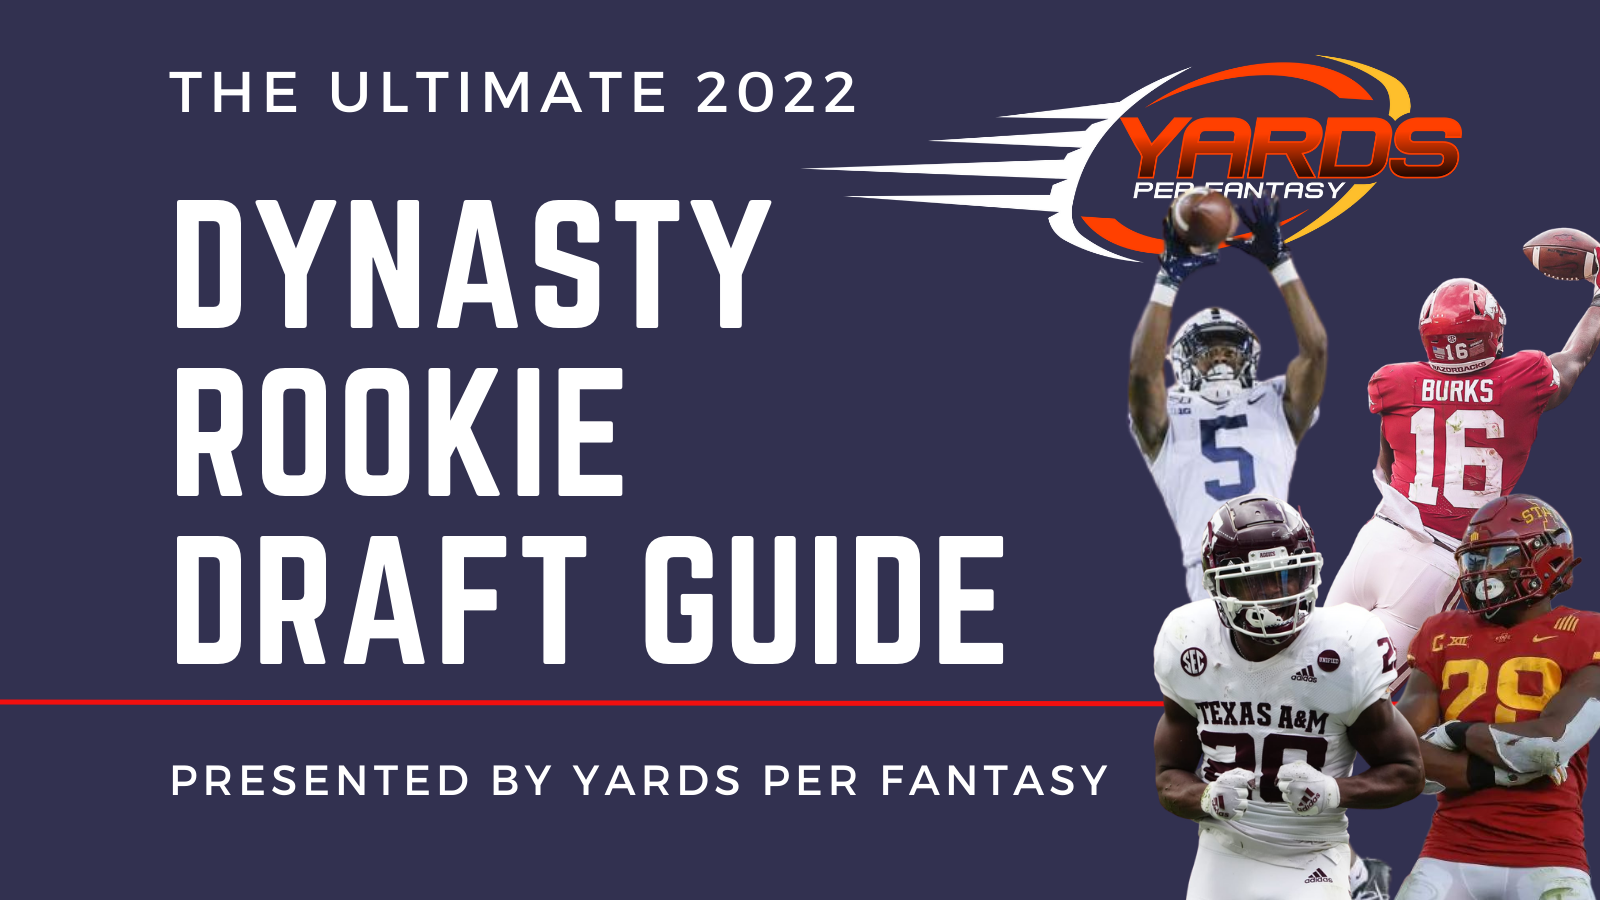 rookie dynasty rankings 2022